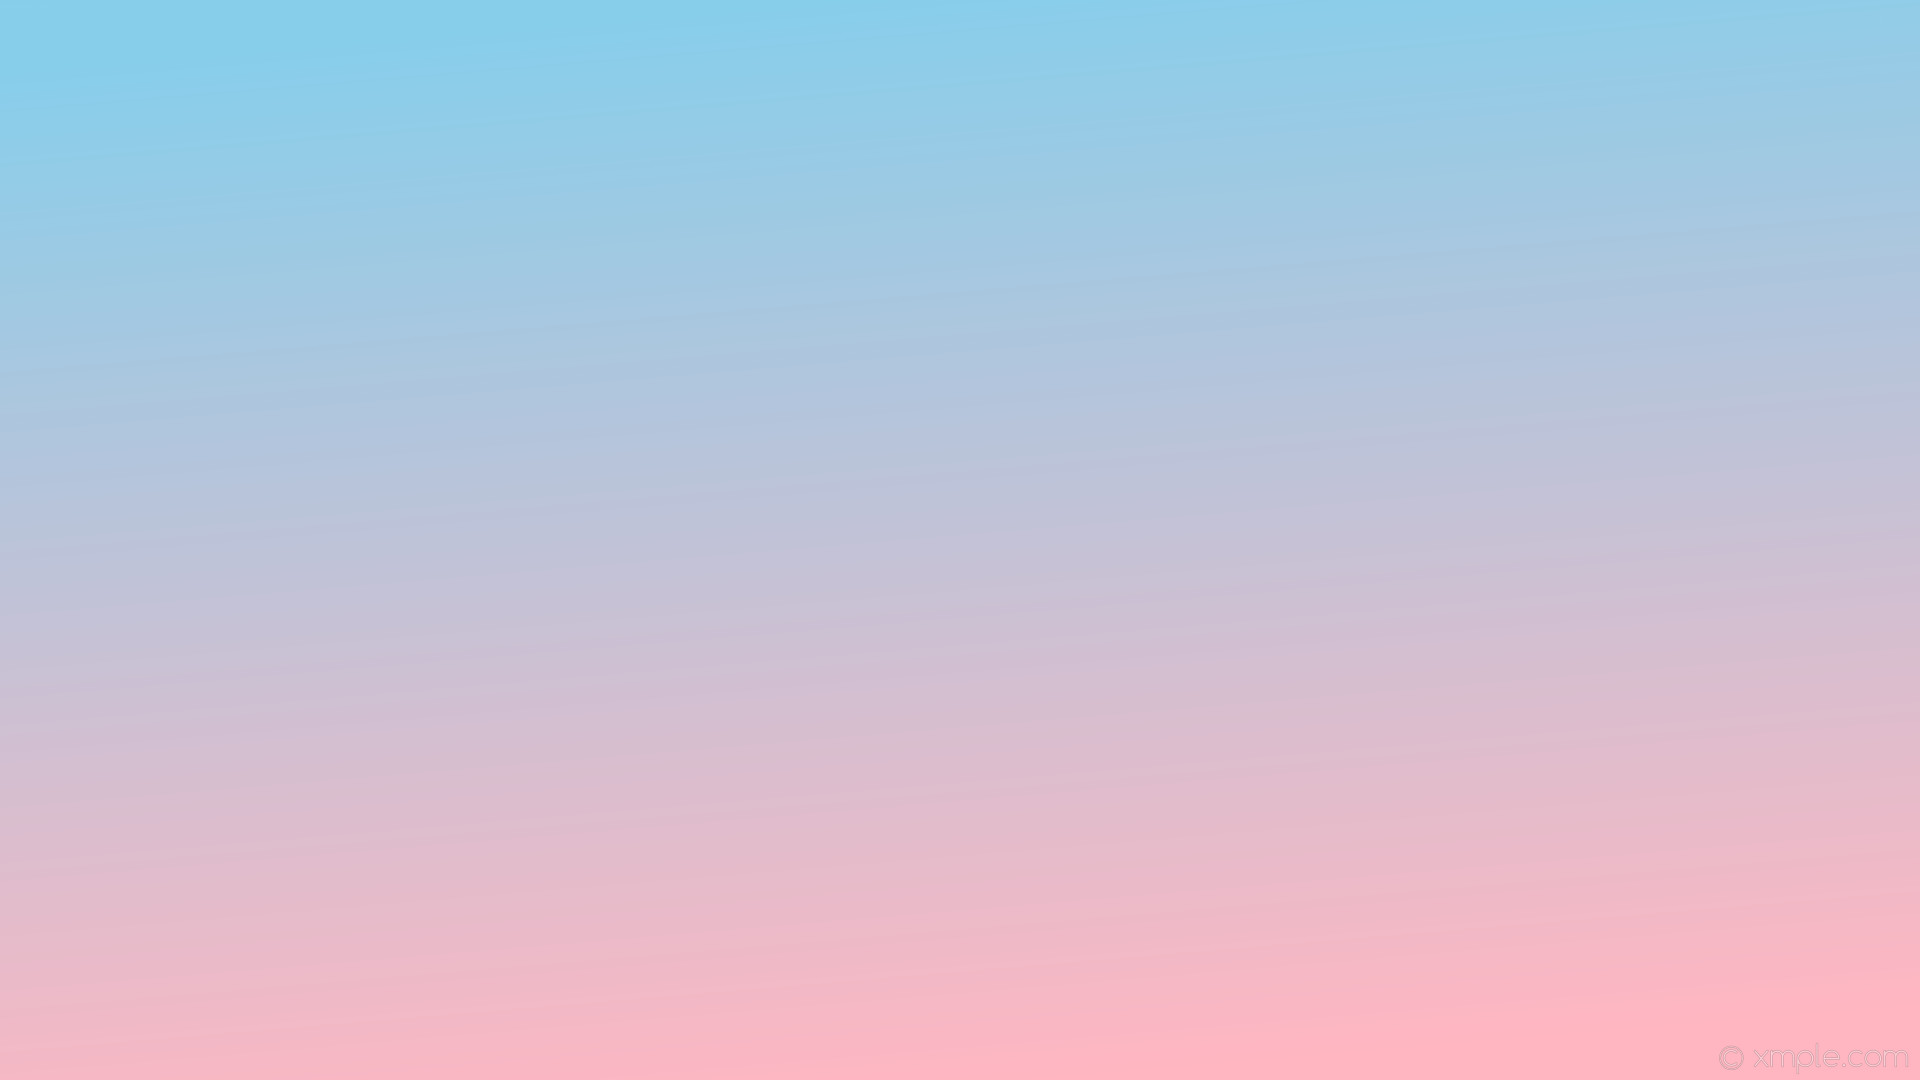 1920x1080 wallpaper blue gradient pink linear light pink sky blue #ffb6c1 #87ceeb 285Â°